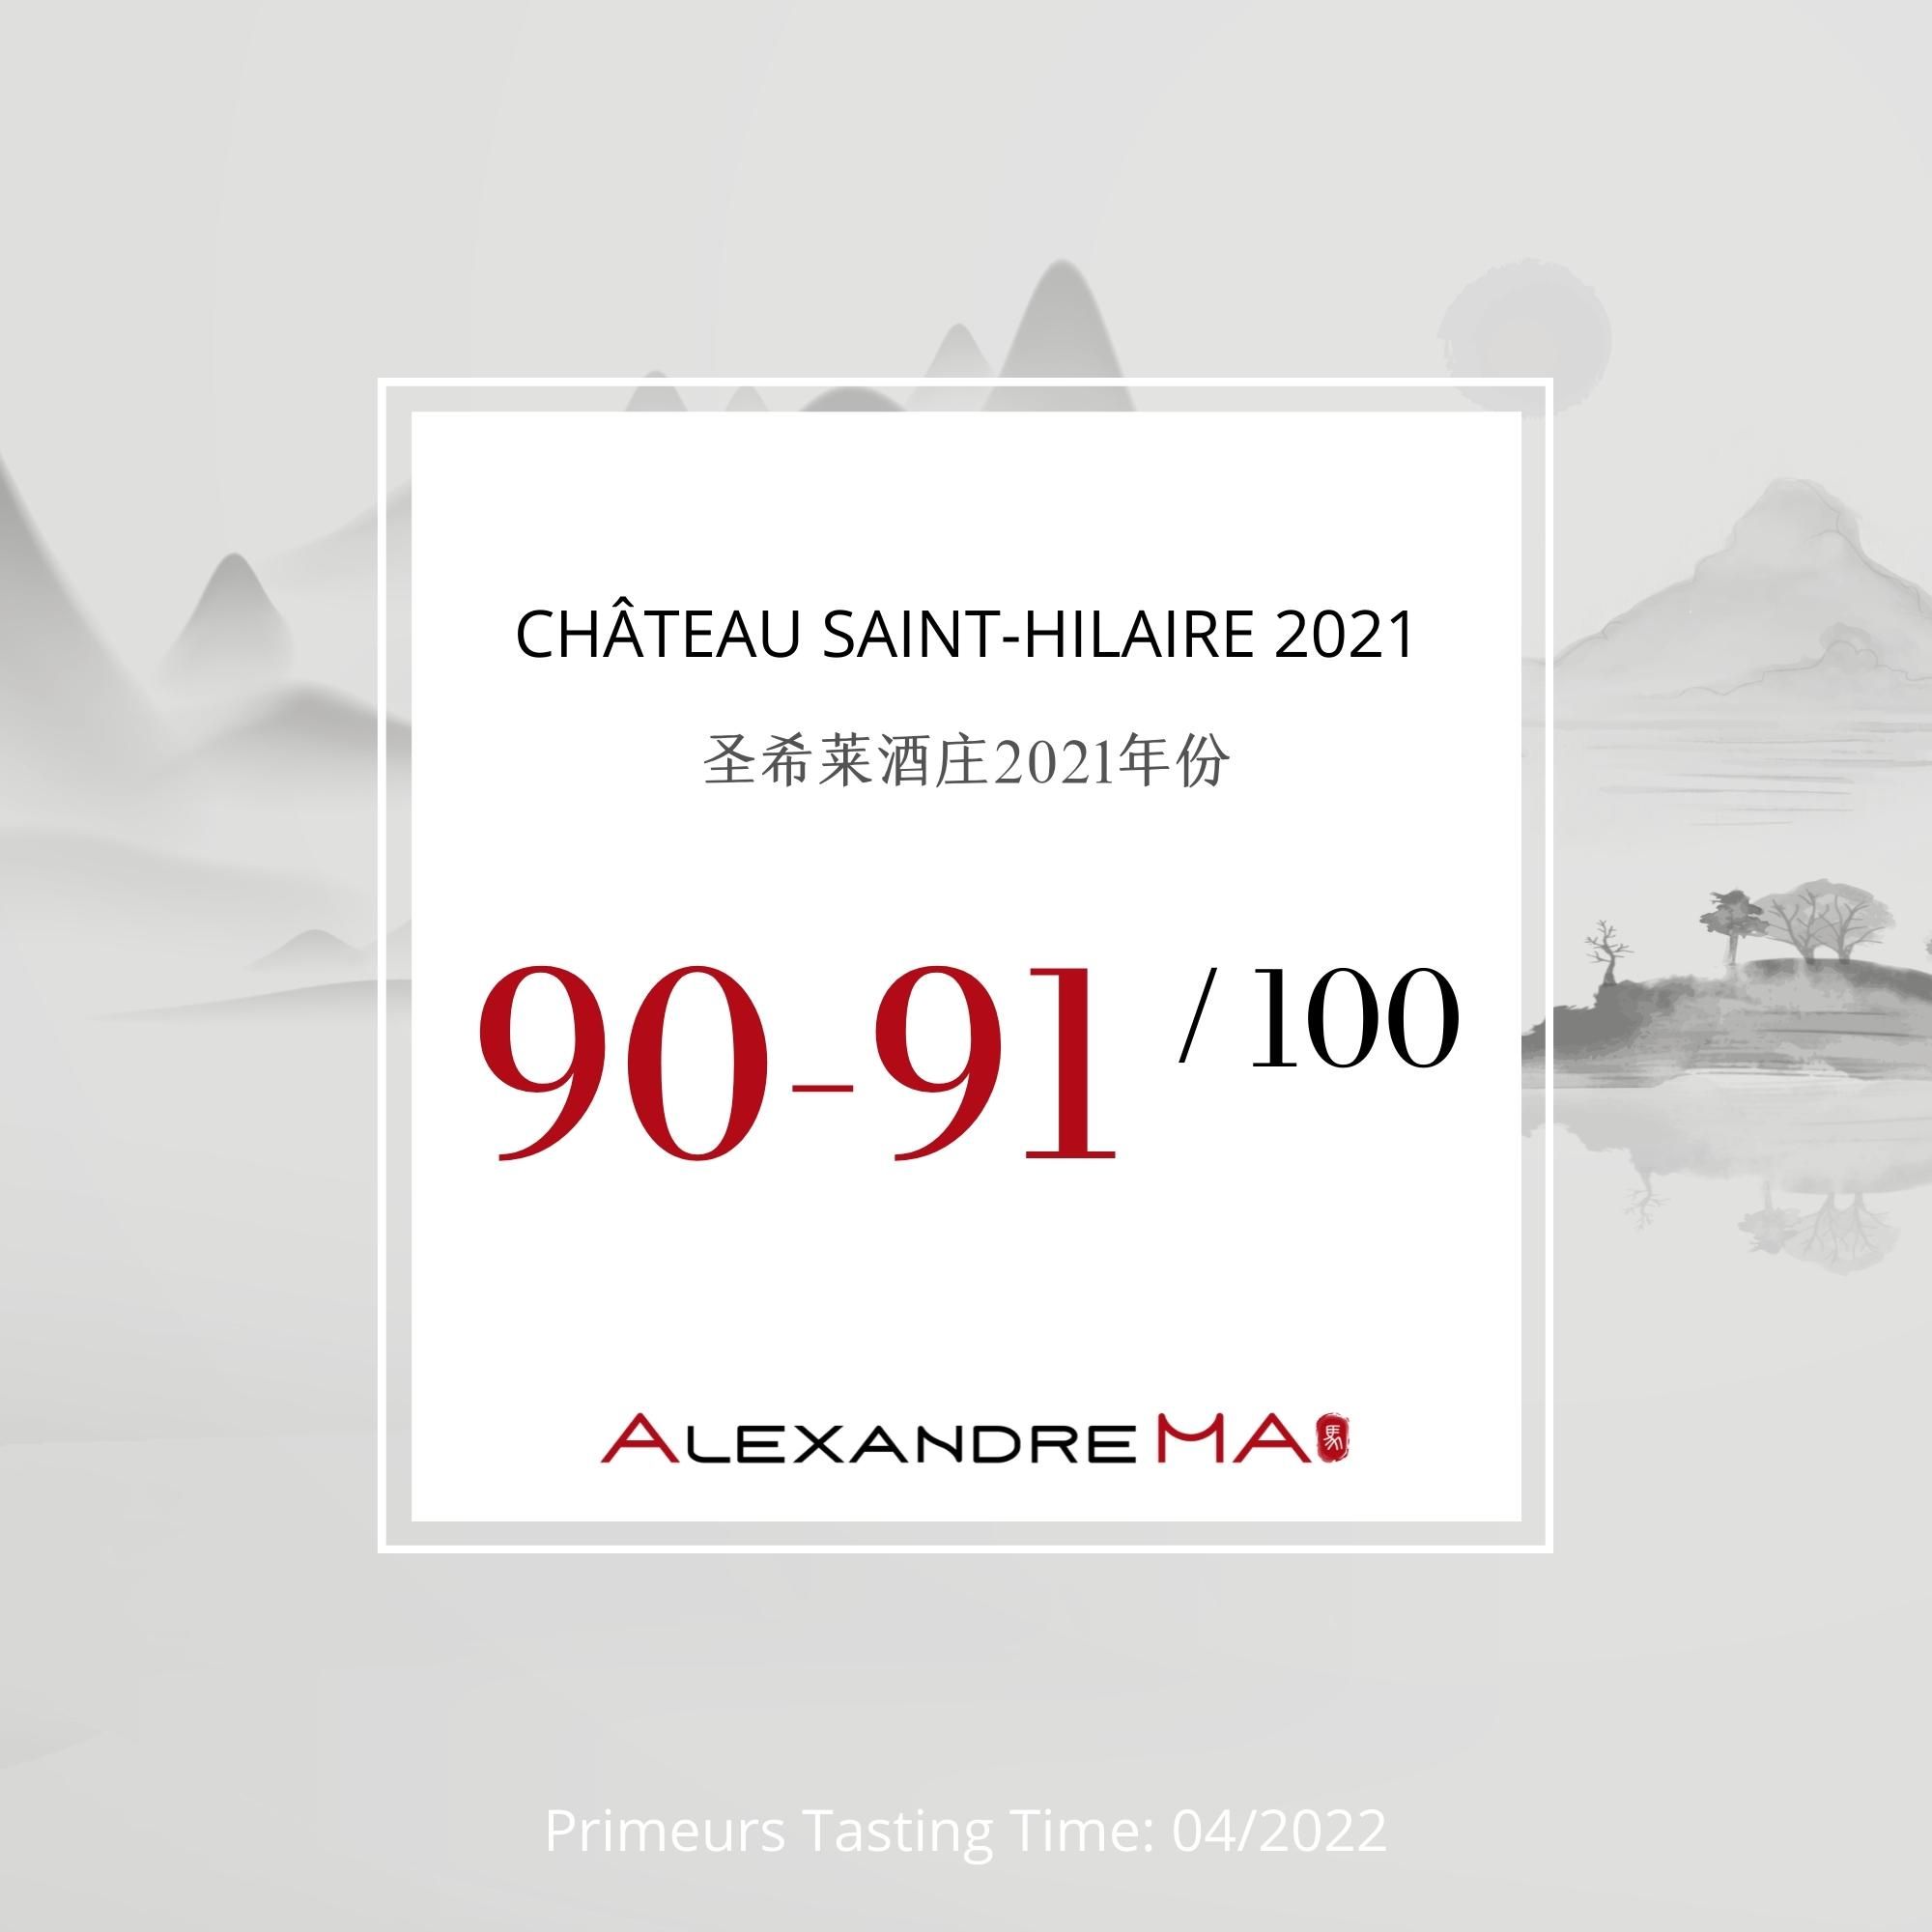 Château Saint-Hilaire 2021 - Alexandre MA